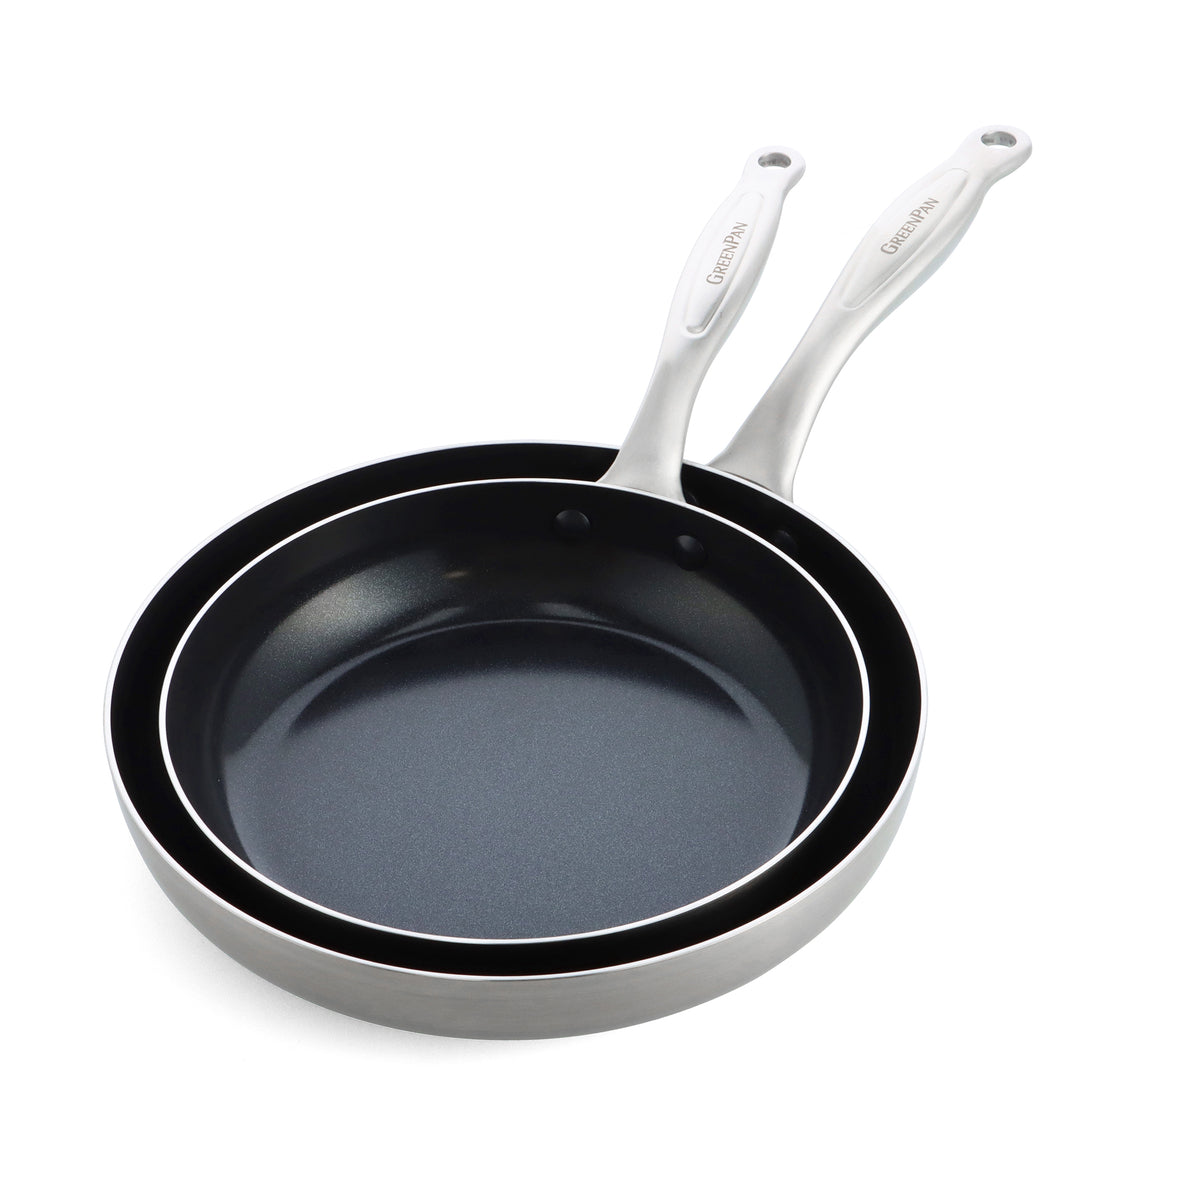 Nonstick Frying Pan Set